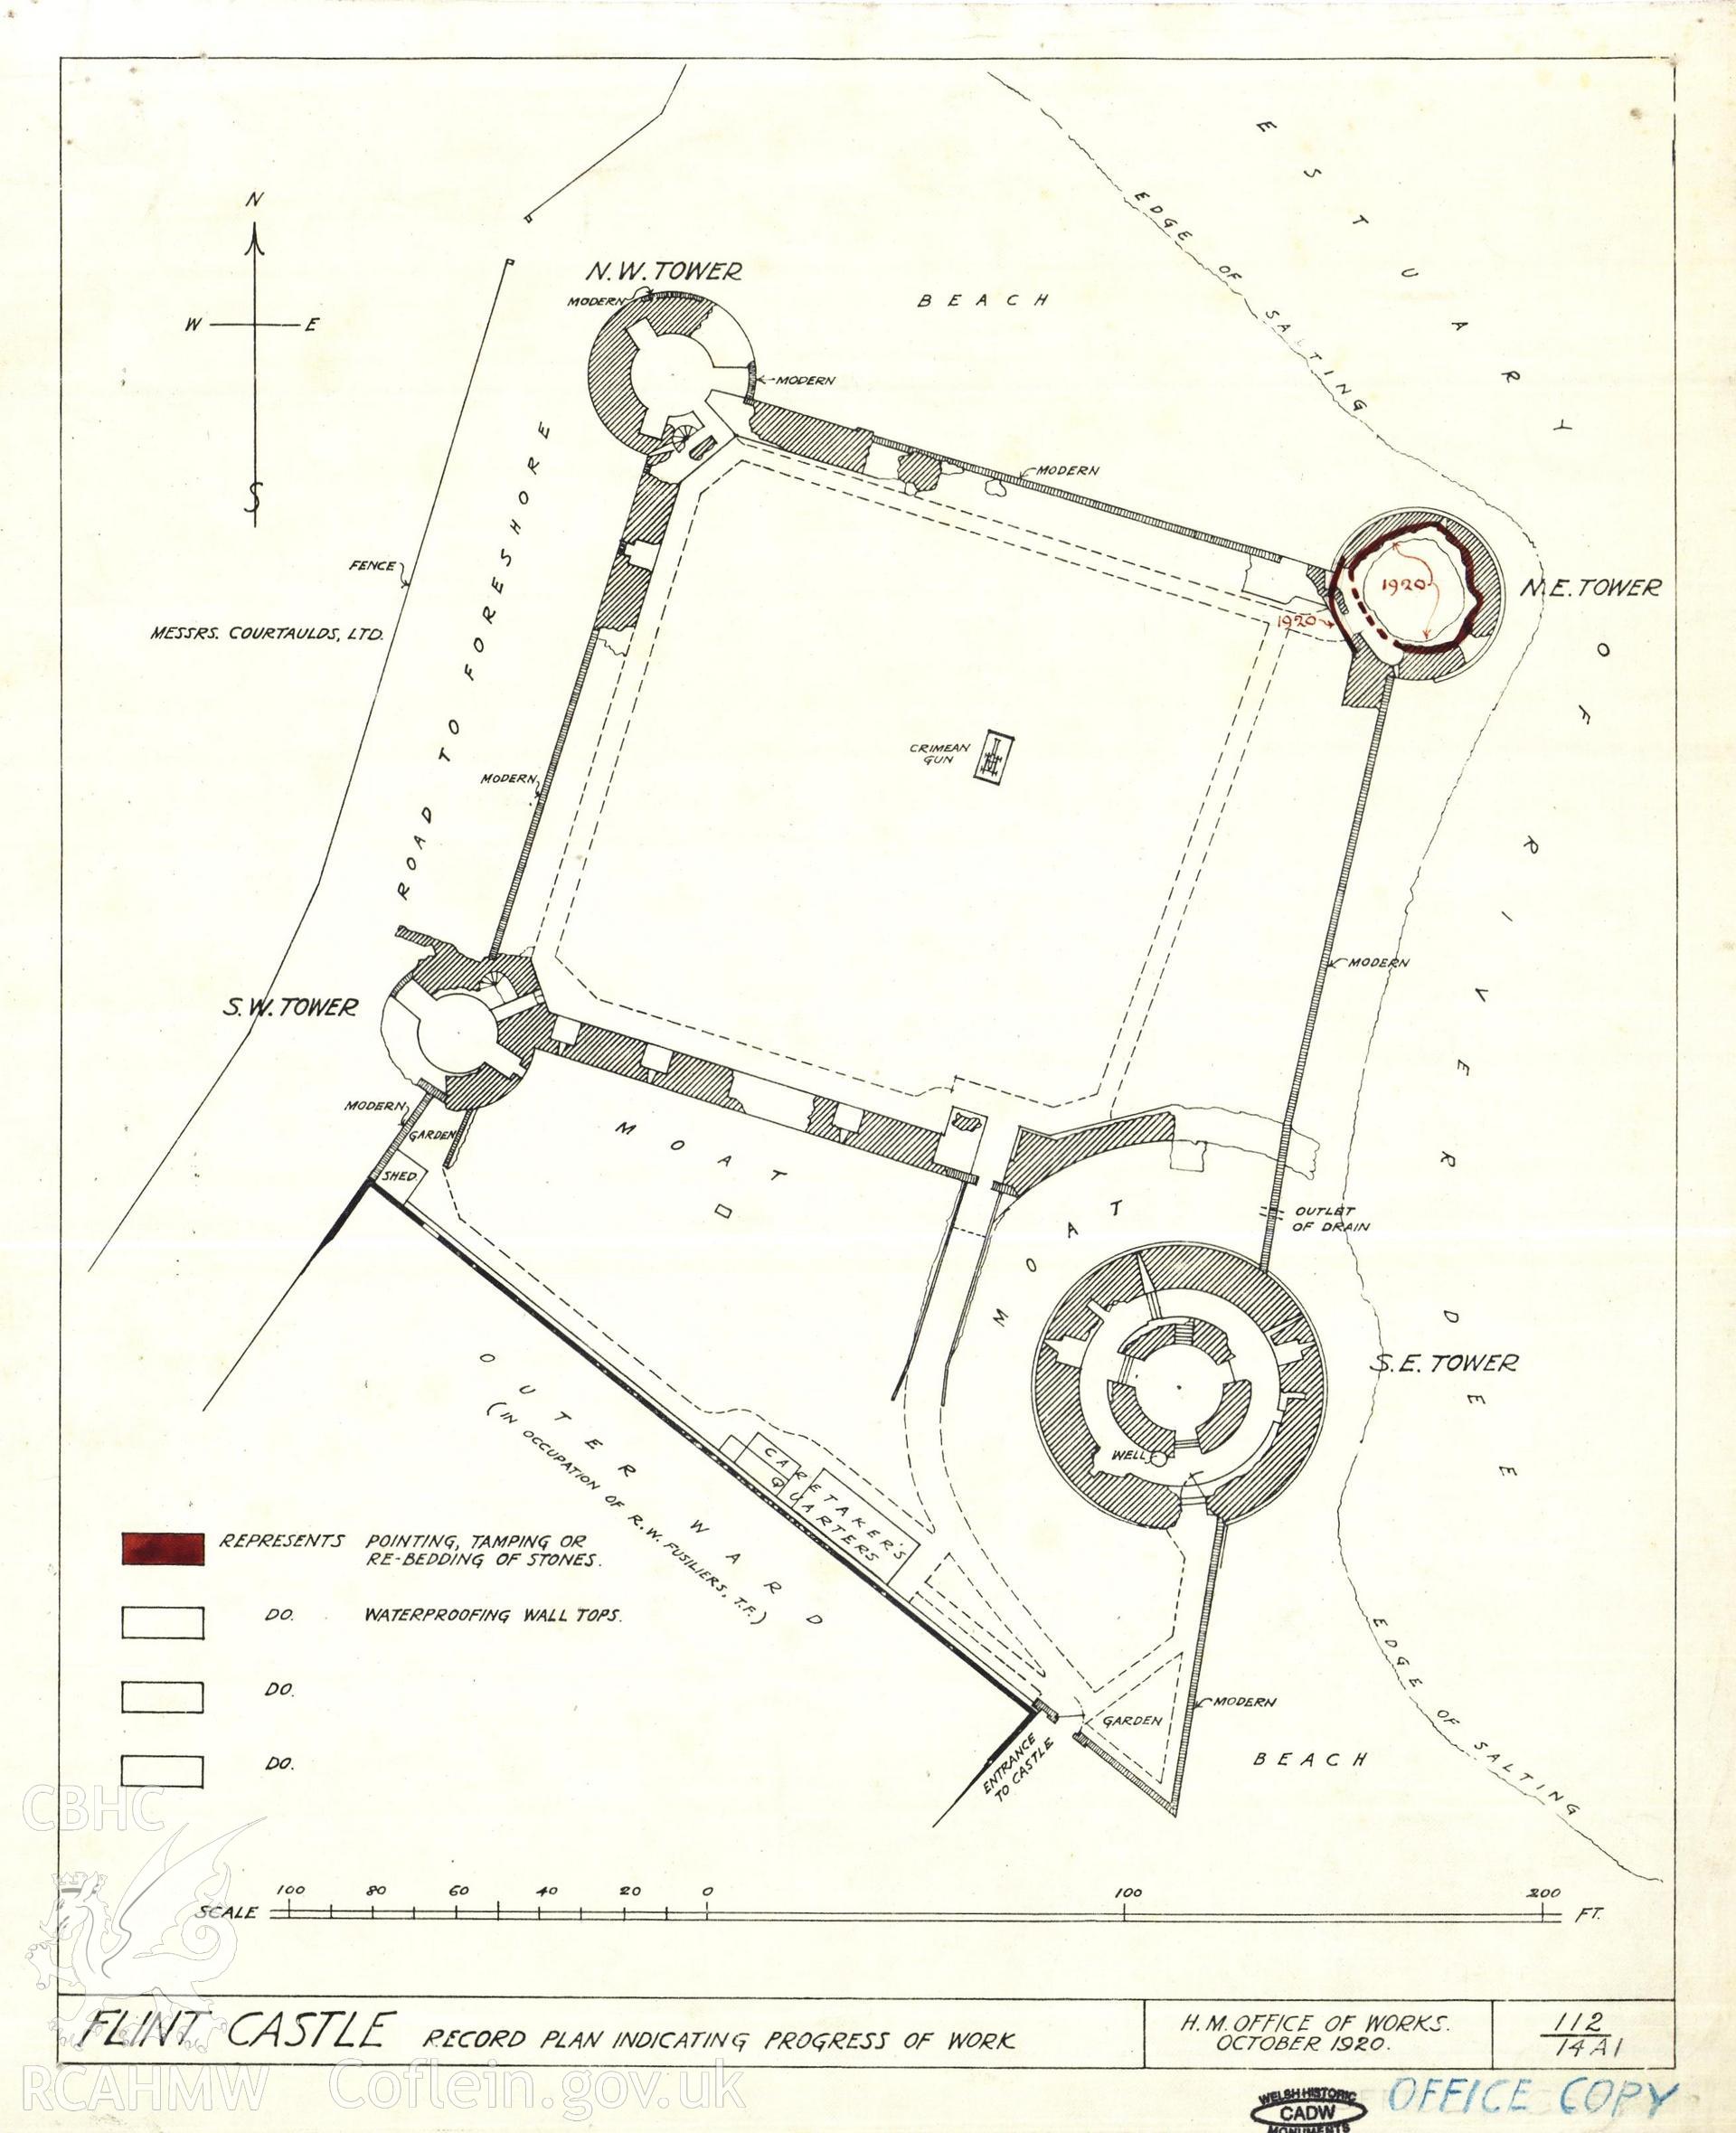 Cadw guardianship monument drawing of Flint Castle. Castle, record plan. Cadw Ref. No:112/14A1. Scale 1:384.